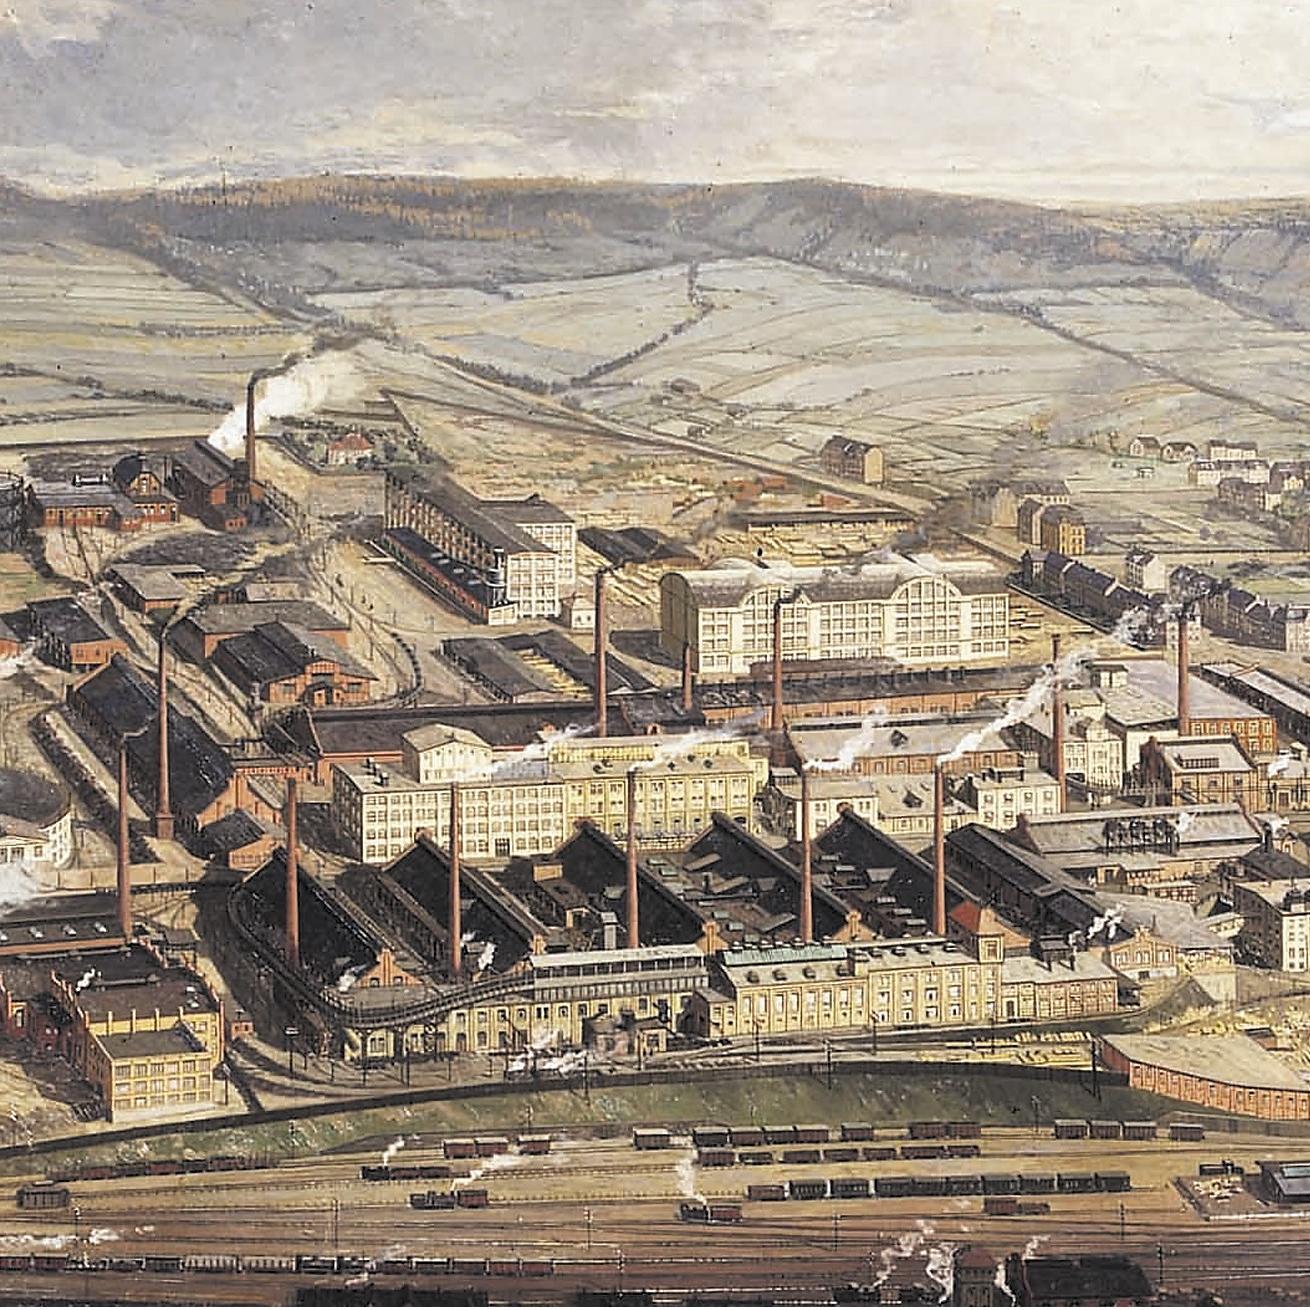 SCHOTT manufacturing plant in Jena, Germany in 1924	